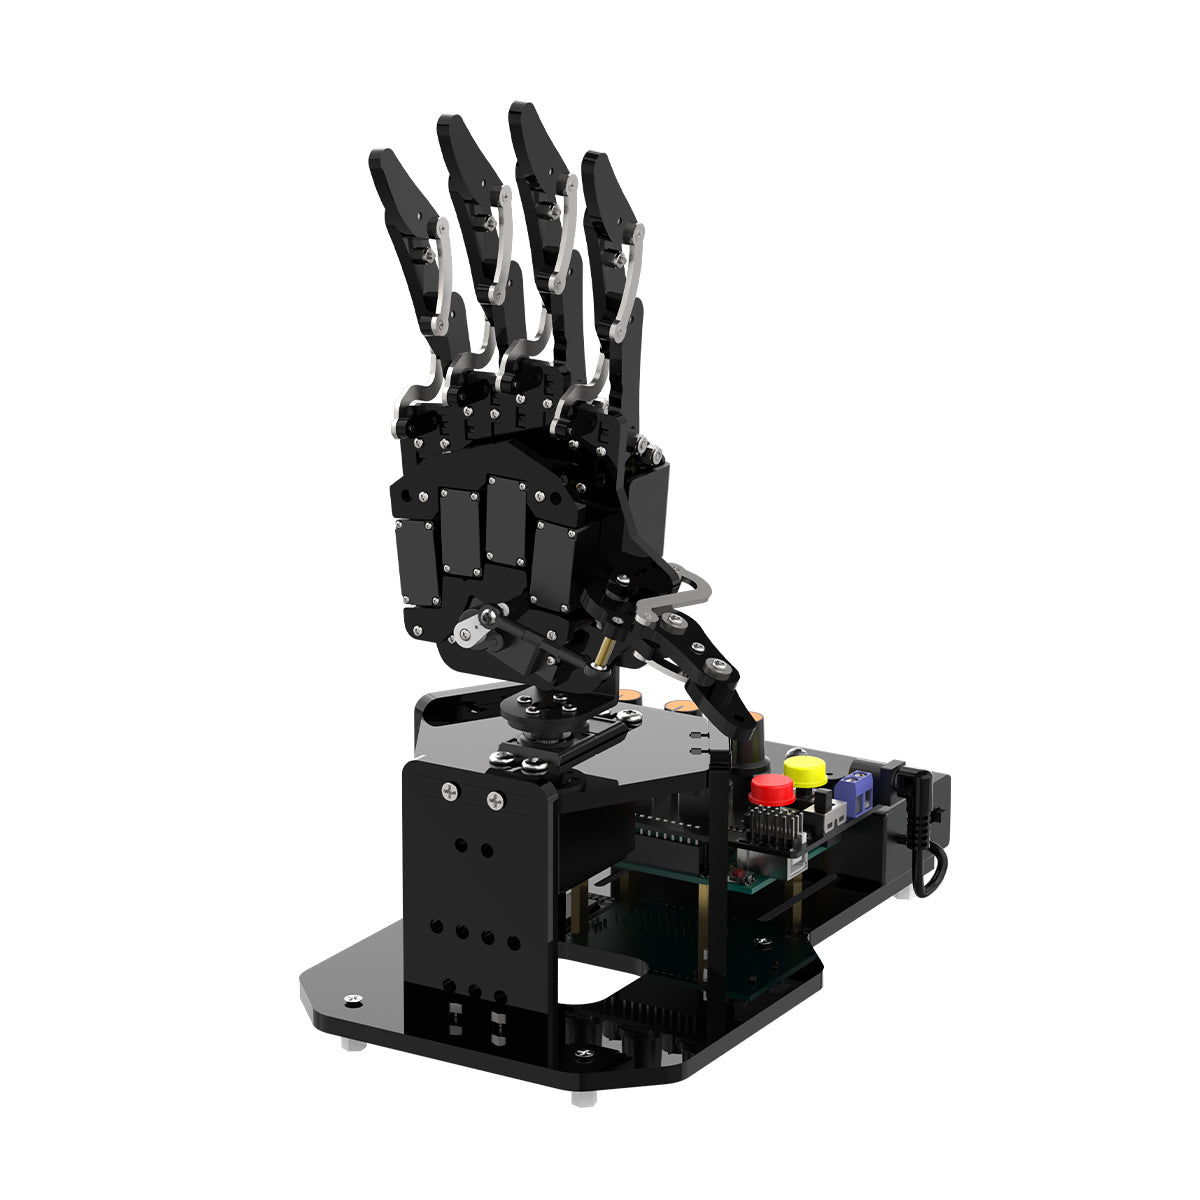 uHand UNO Open Source AI Bionic Robot Hand Bionic Support Somatosensory Control, Arduino Programming